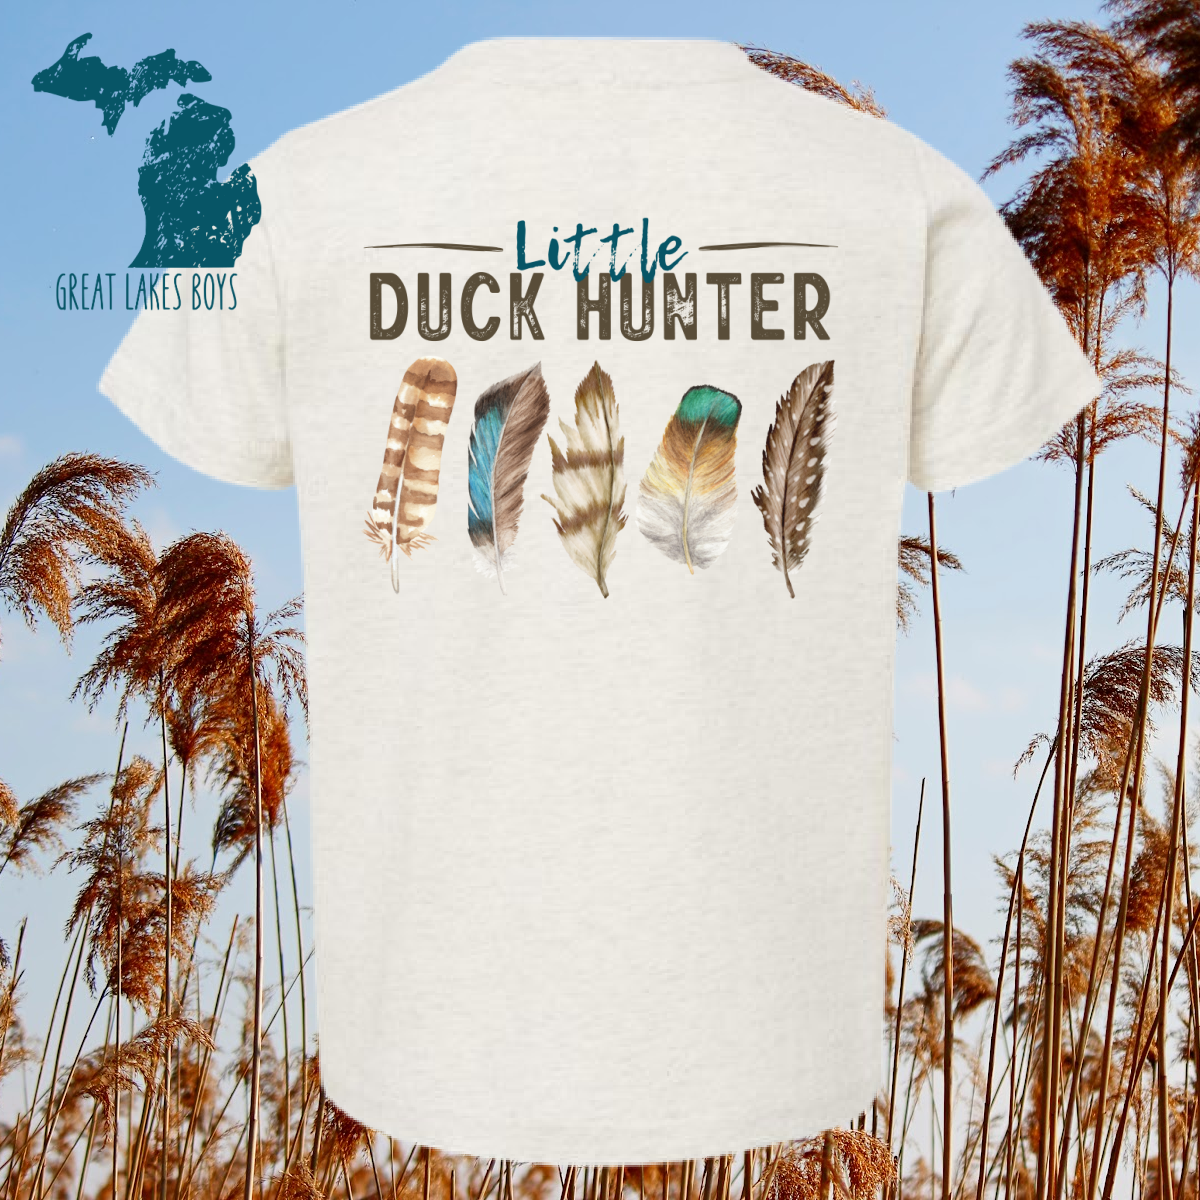 Great Lakes Boys - Little Duck Hunter